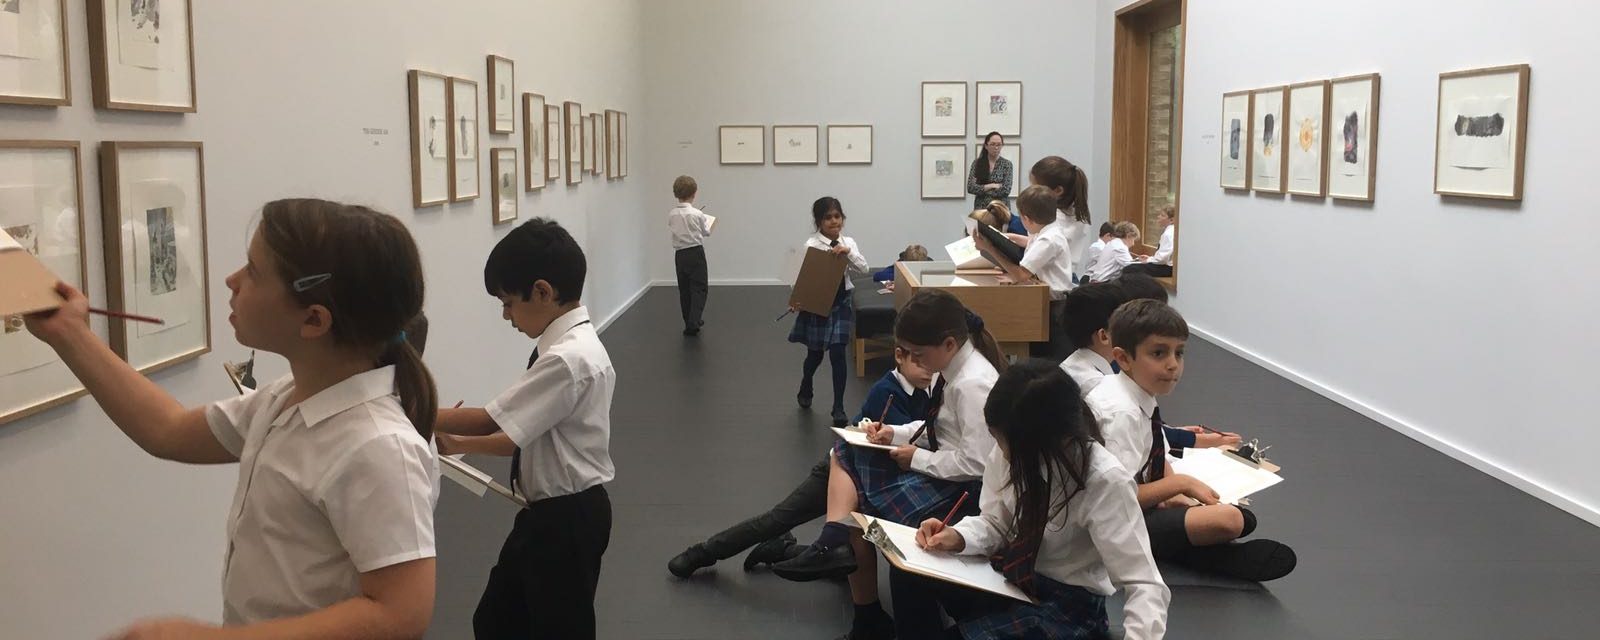 children in an art gallery